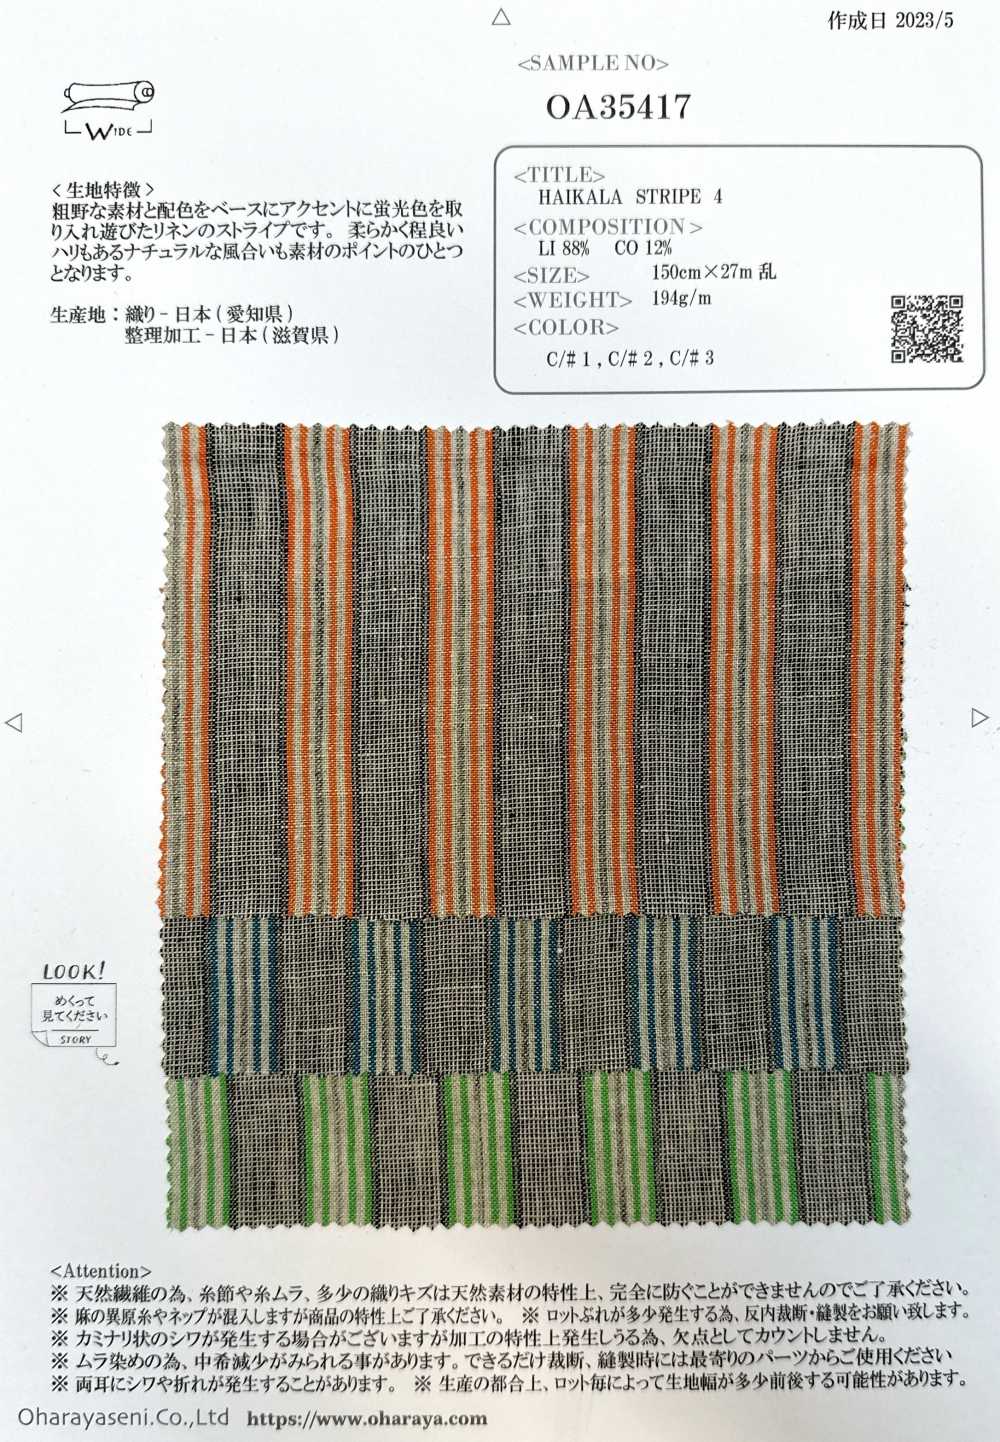 OA35417 海卡拉條紋 4[面料] 小原屋繊維